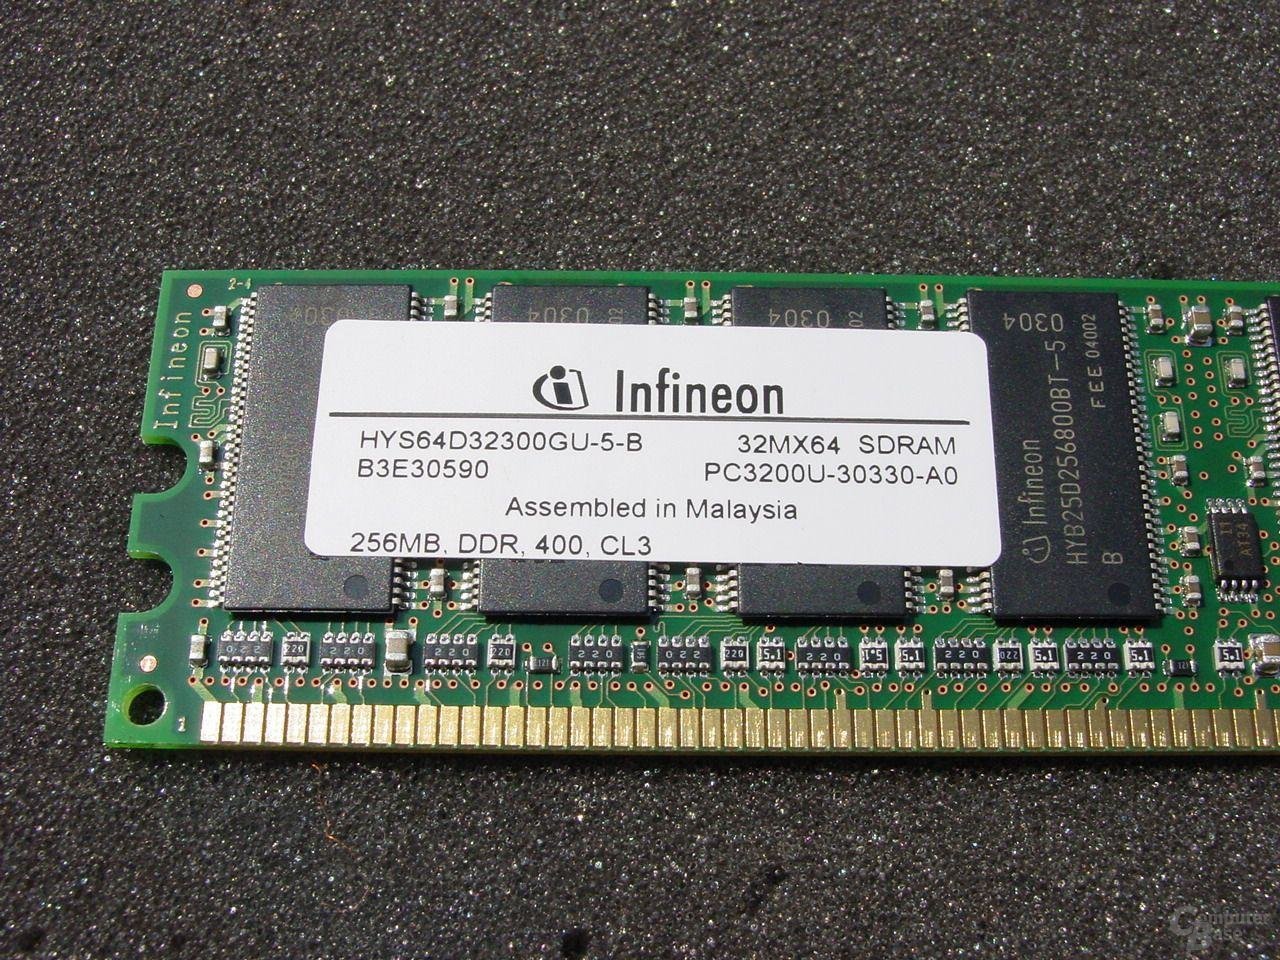 Infineon DDR400